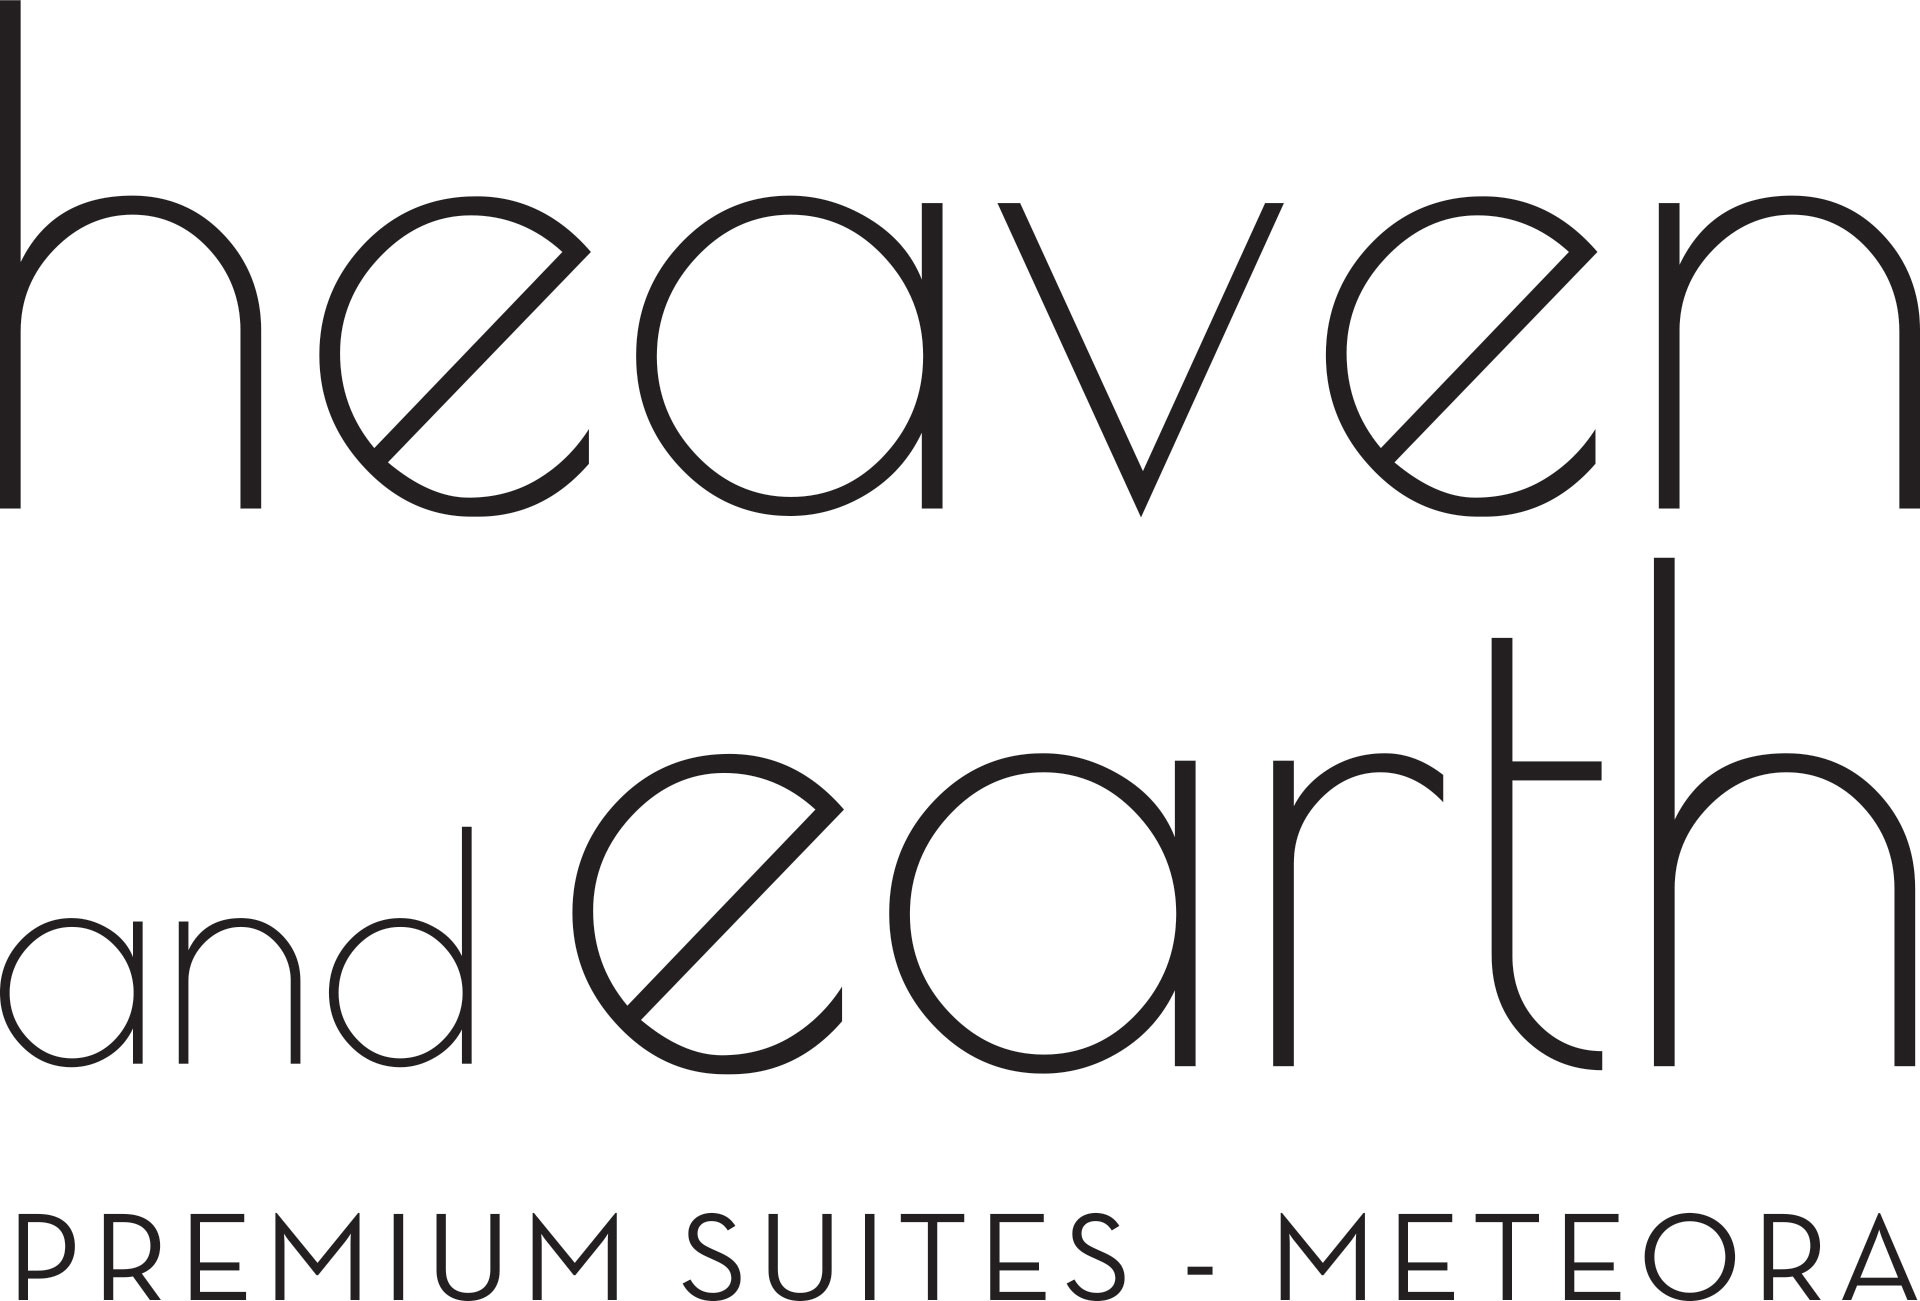 Meteora Heaven and Earth